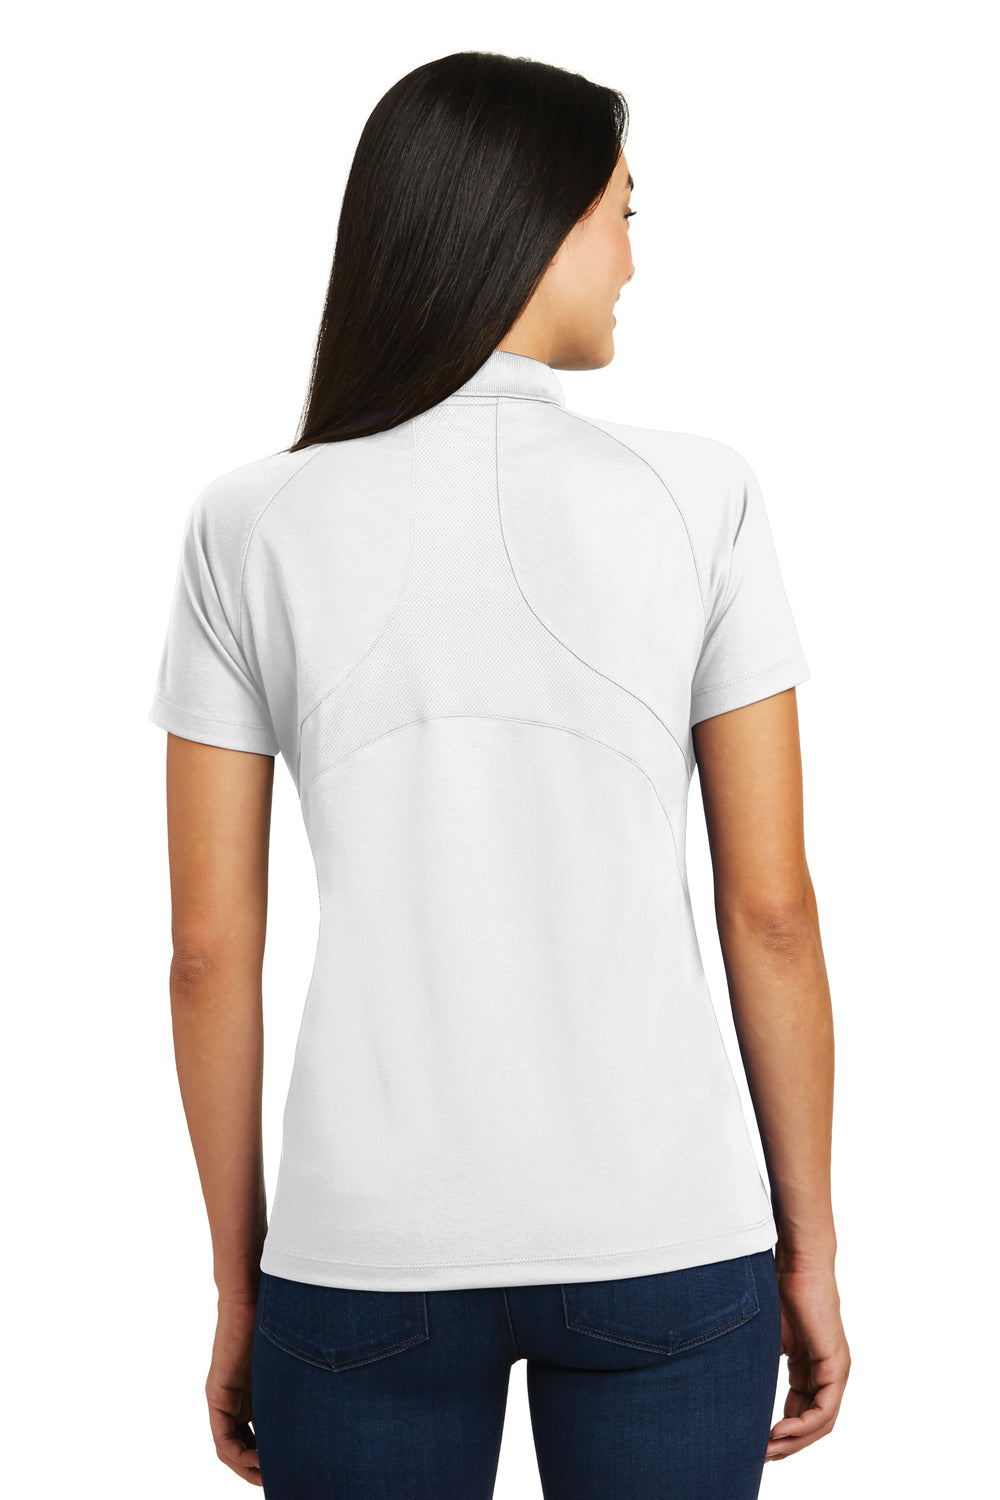 Sport-Tek L474 Womens Dri-Mesh Moisture Wicking Short Sleeve Polo Shirt White Back